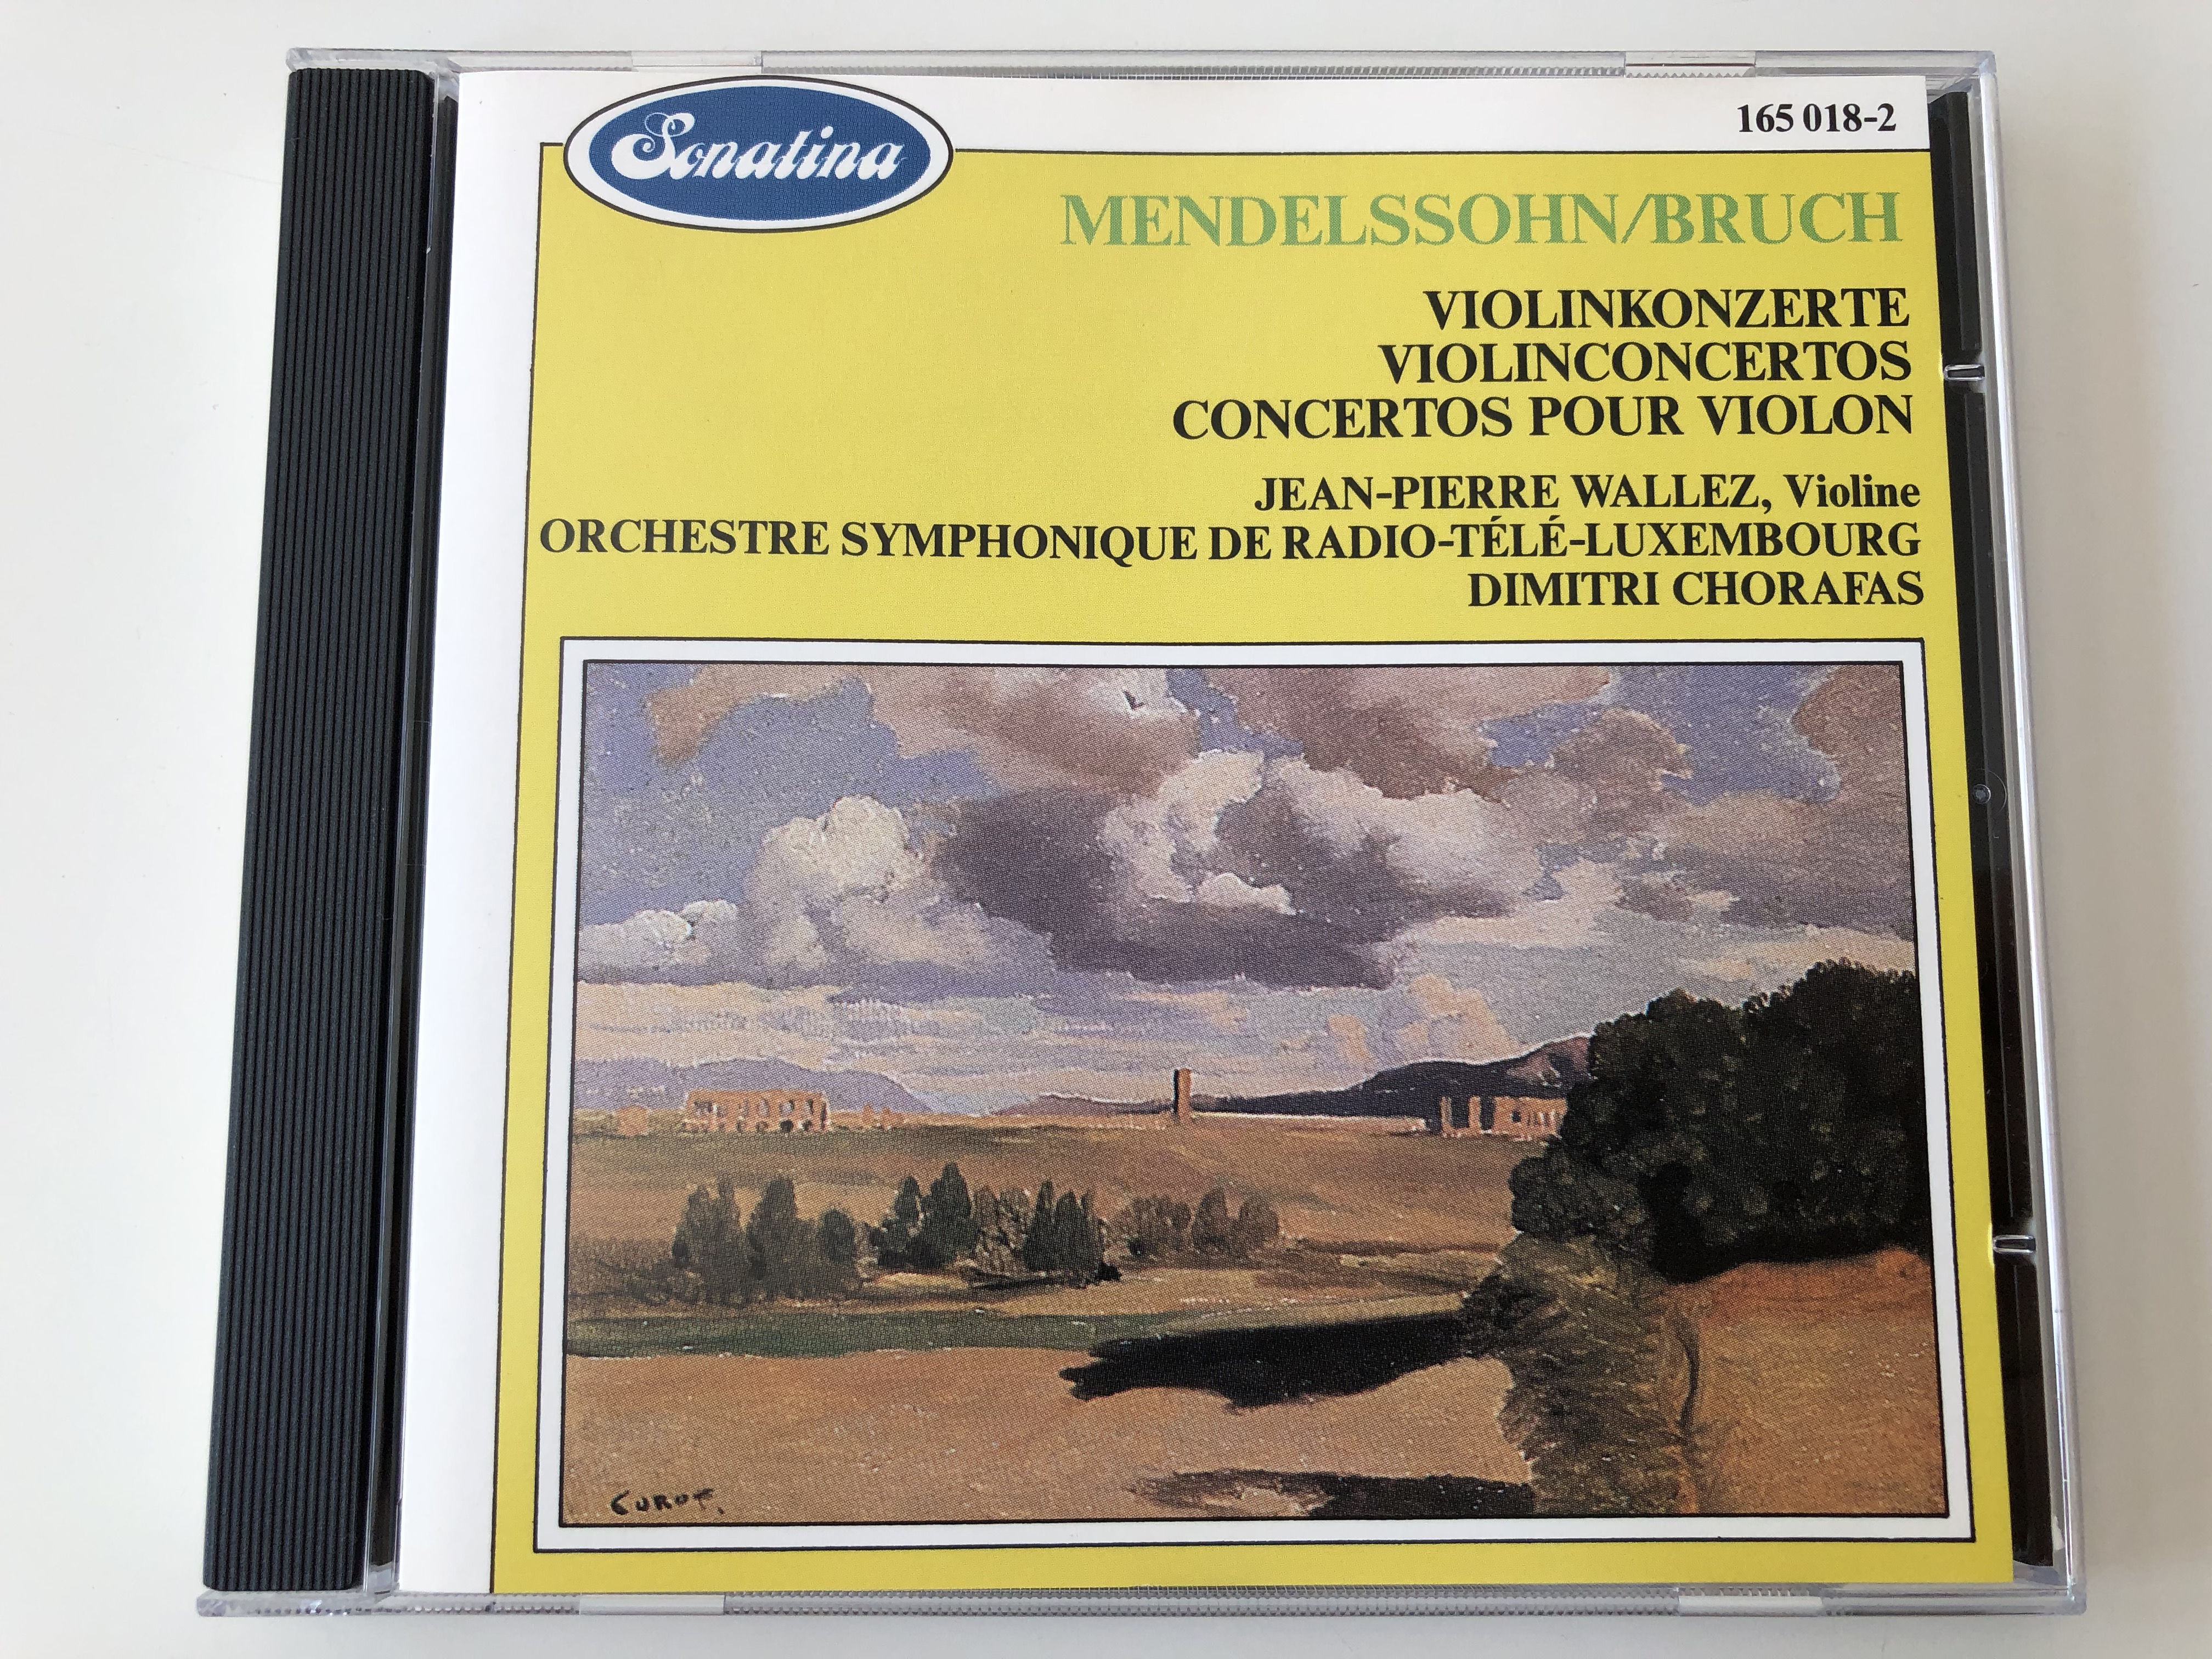 mendelssohnbrush-violinkonzerte-violonconcertos-concertos-pour-violon-jean-pierre-wallez-violine-orchestre-symphonique-de-radio-tele-luxembourg-dimitri-chorafas-sonatina-audio-cd-1987-ster-1-.jpg